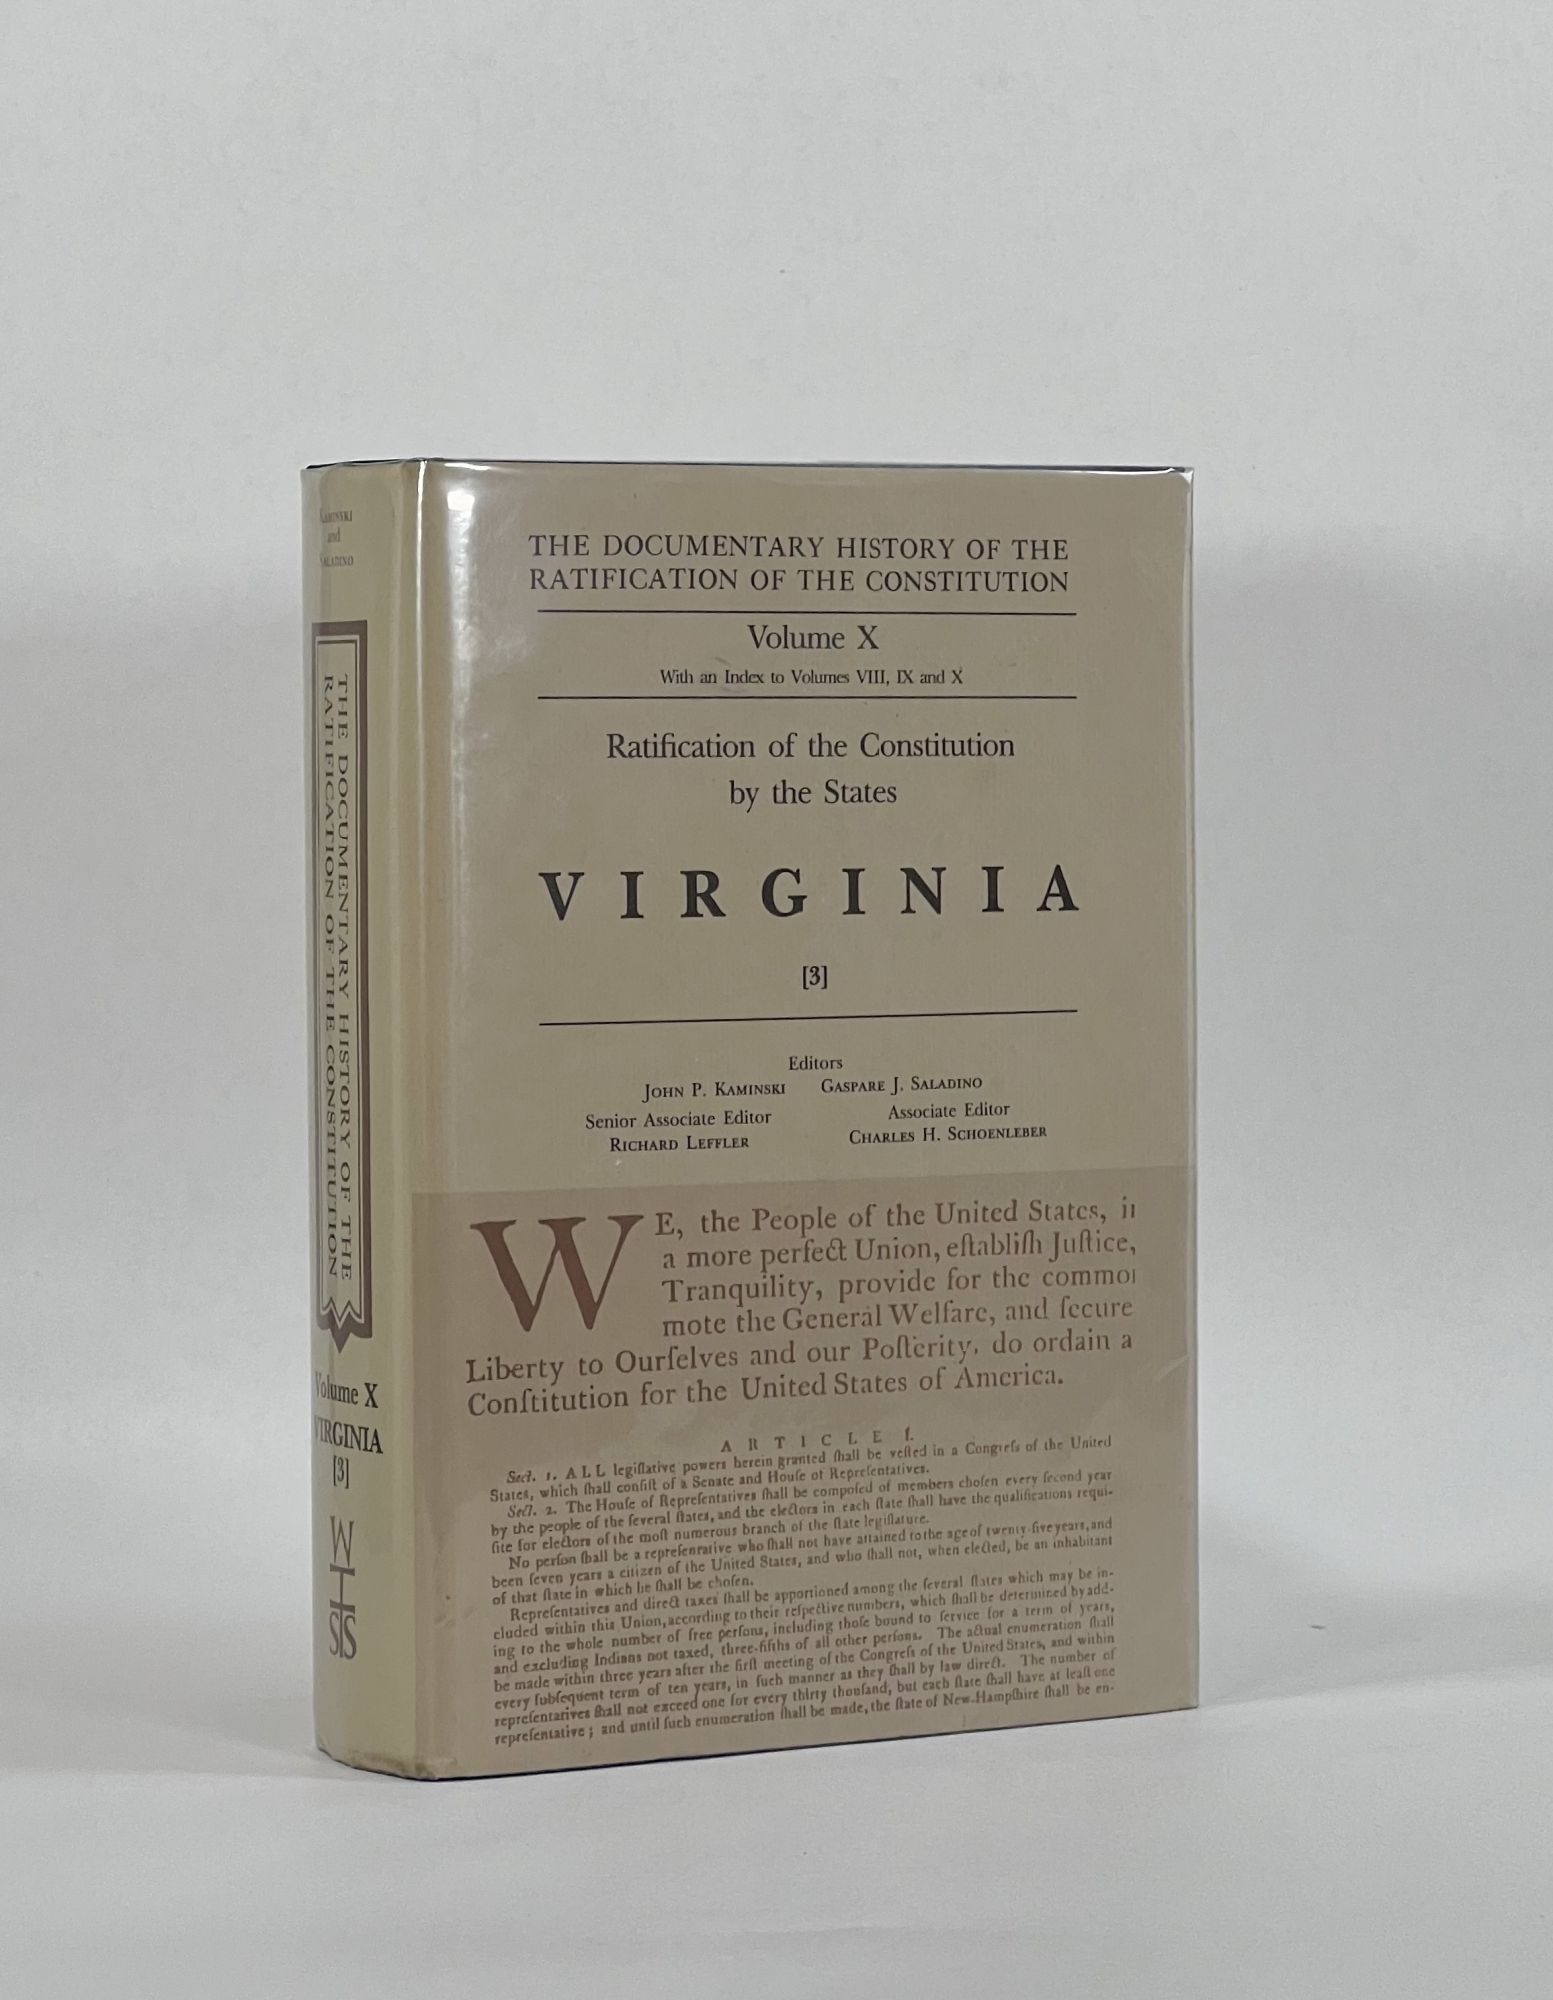 THE DOCUMENTARY HISTORY OF THE RATIFICATION OF THE CONSTITUTION -- VOLUME X: RATIFICATION OF THE CONSTITUTION BY THE STATES: VIRGINIA (3) - Kaminski, John P. and Gaspare J. Saladino (editors)